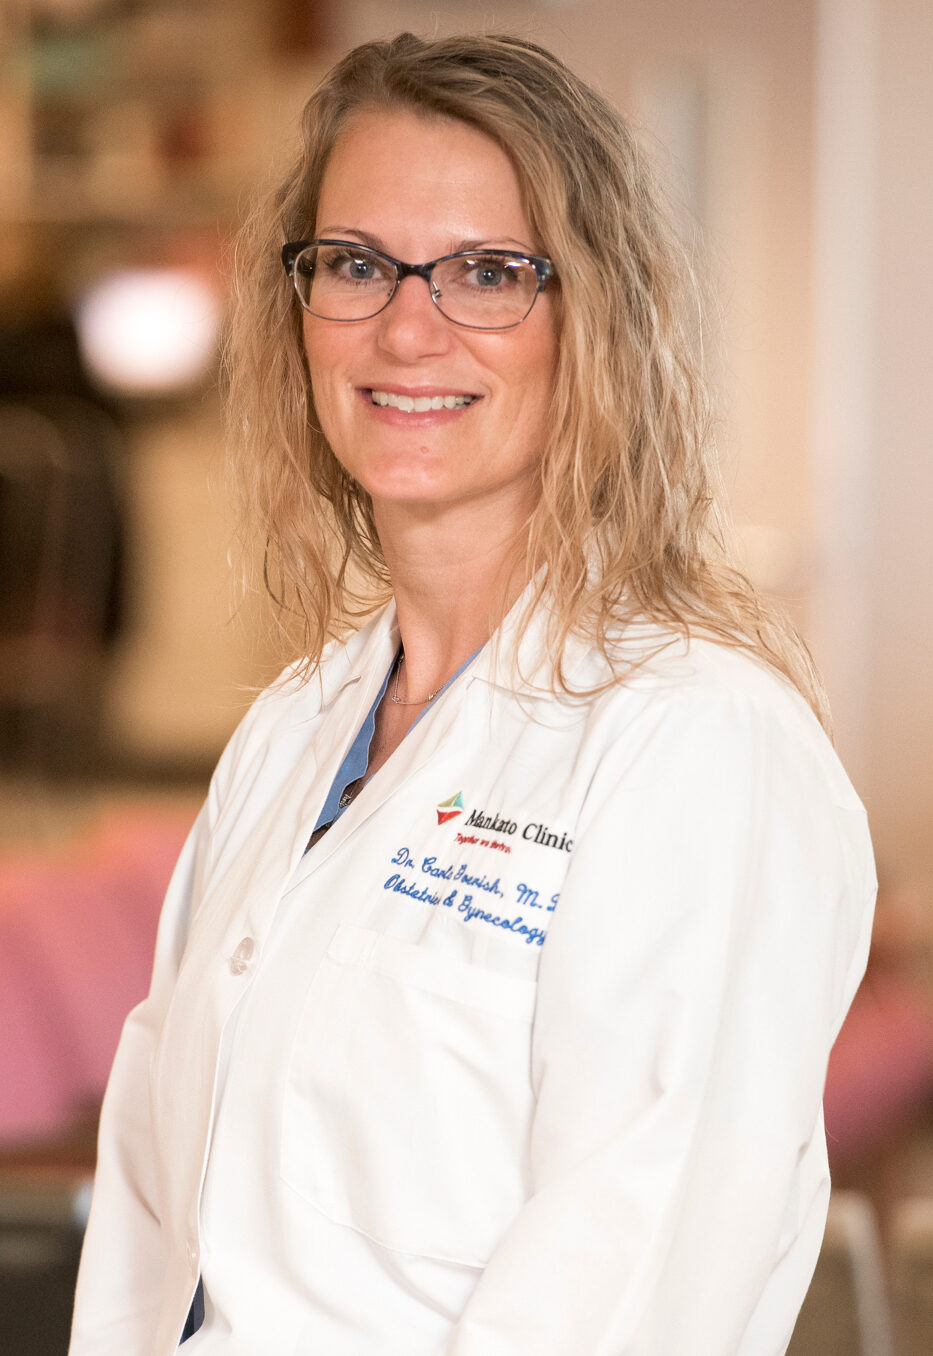 Carla Goerish - Obstetrics and Gynecology (OB/GYN) doctor at Main Street Clinic